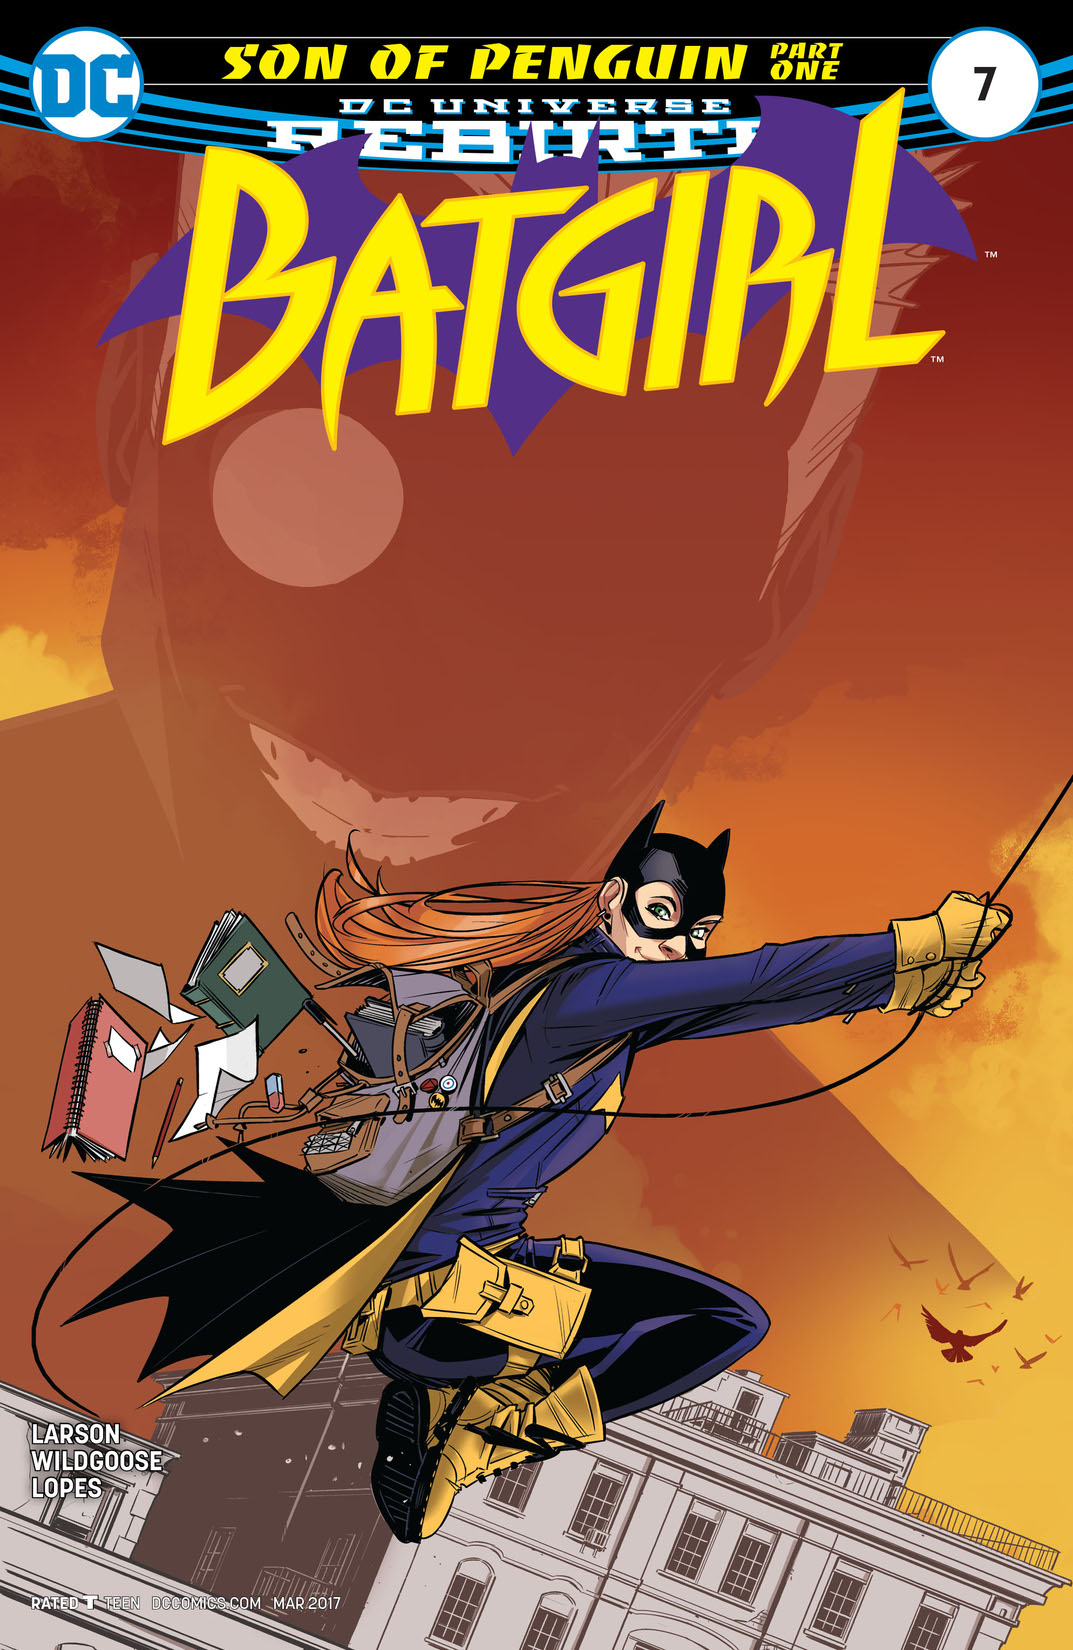 Batgirl (2016-) #7 preview images